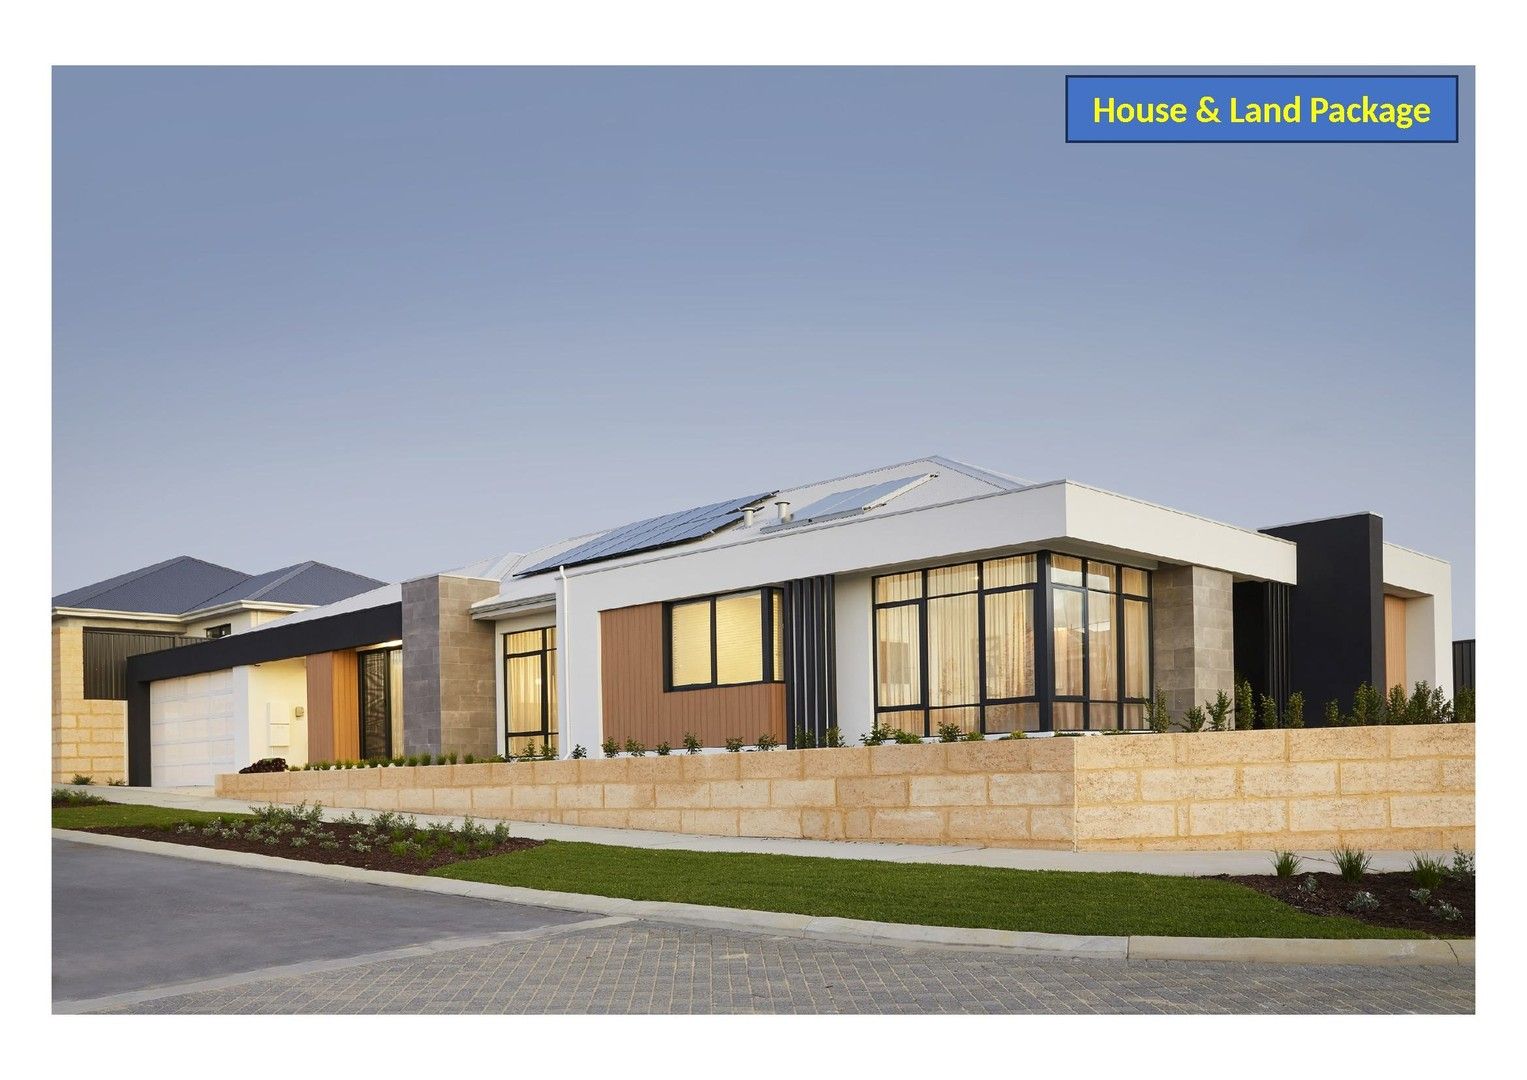 3 bedrooms New House & Land in Lot 45 Borlaug Circuit BALDIVIS WA, 6171